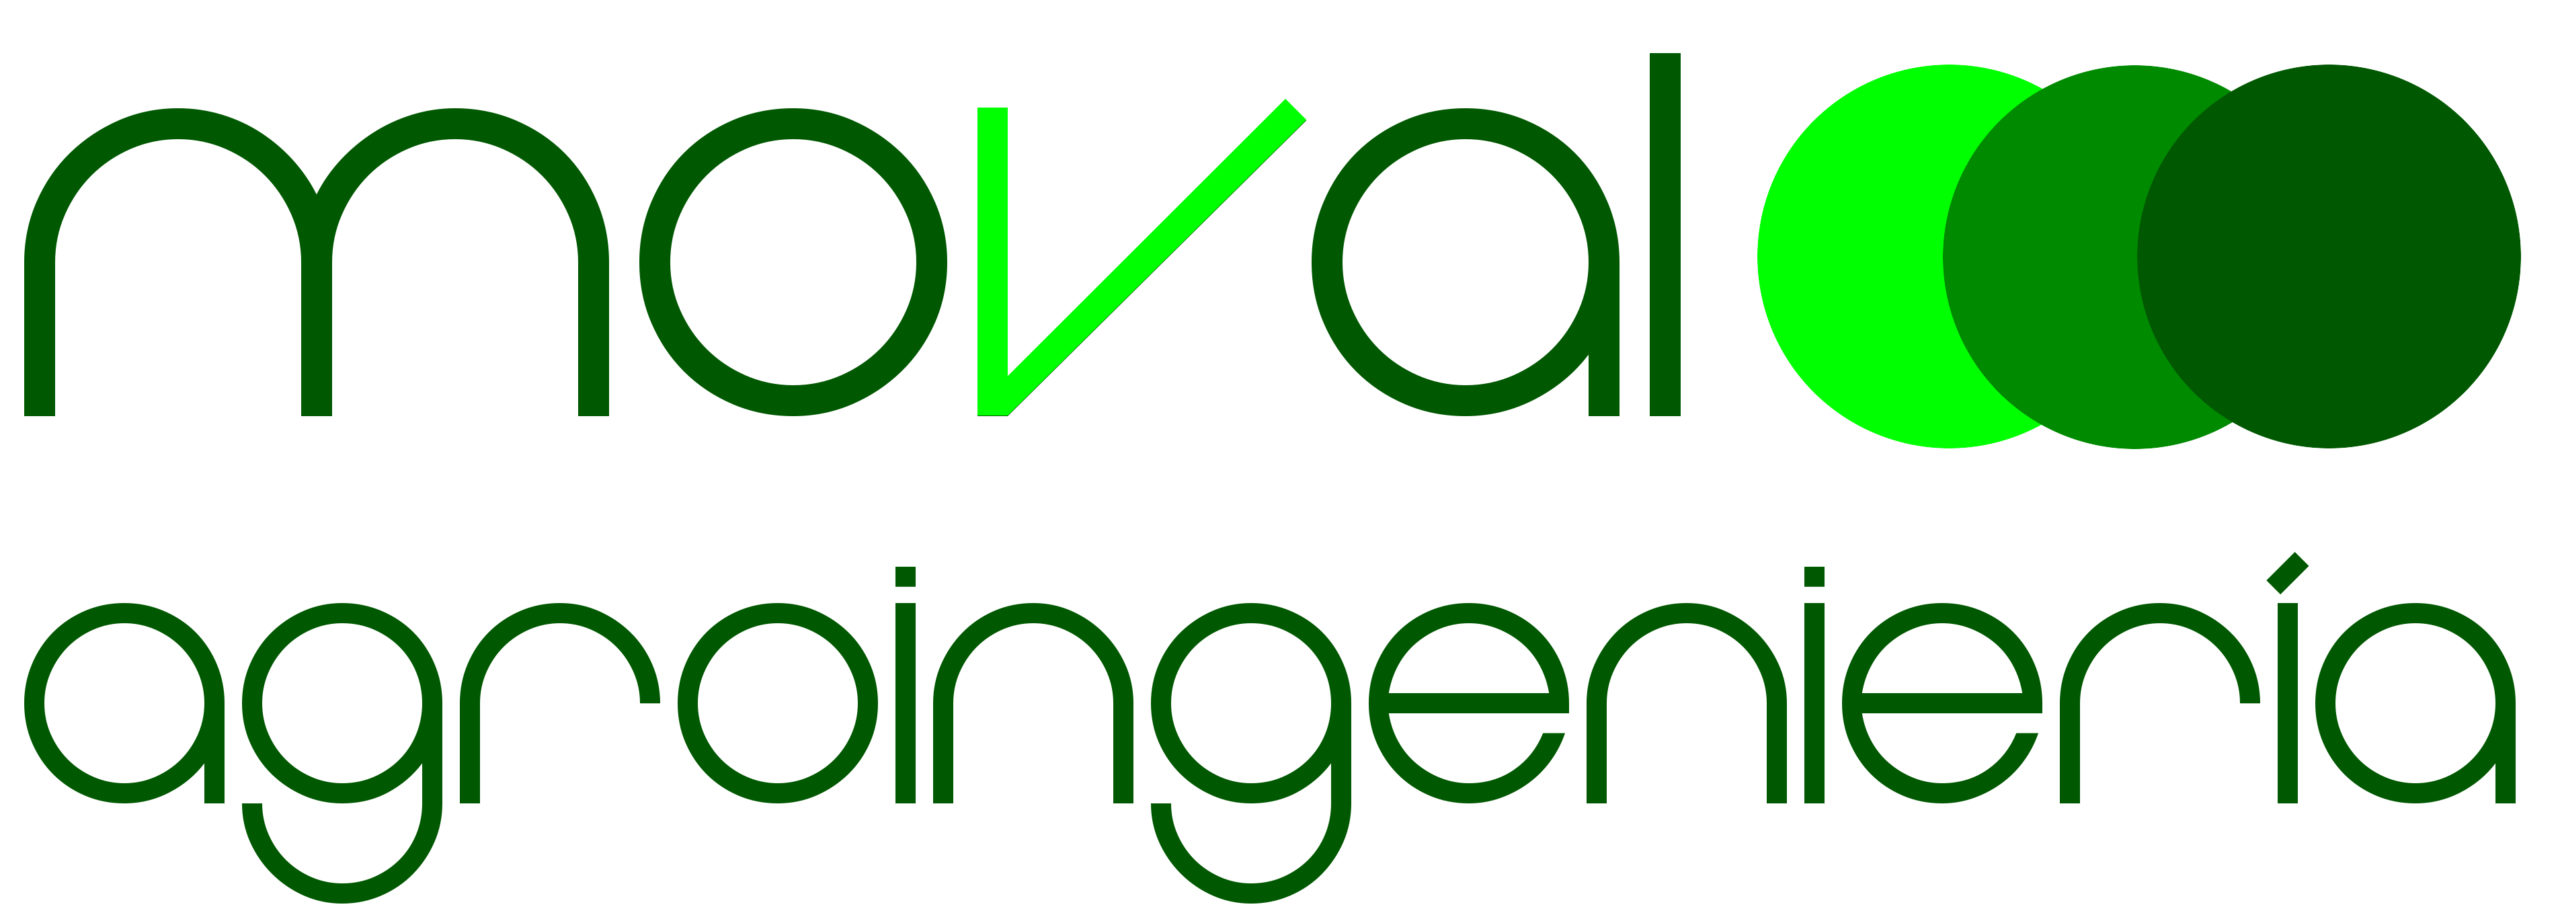 moval agroingenieria logo